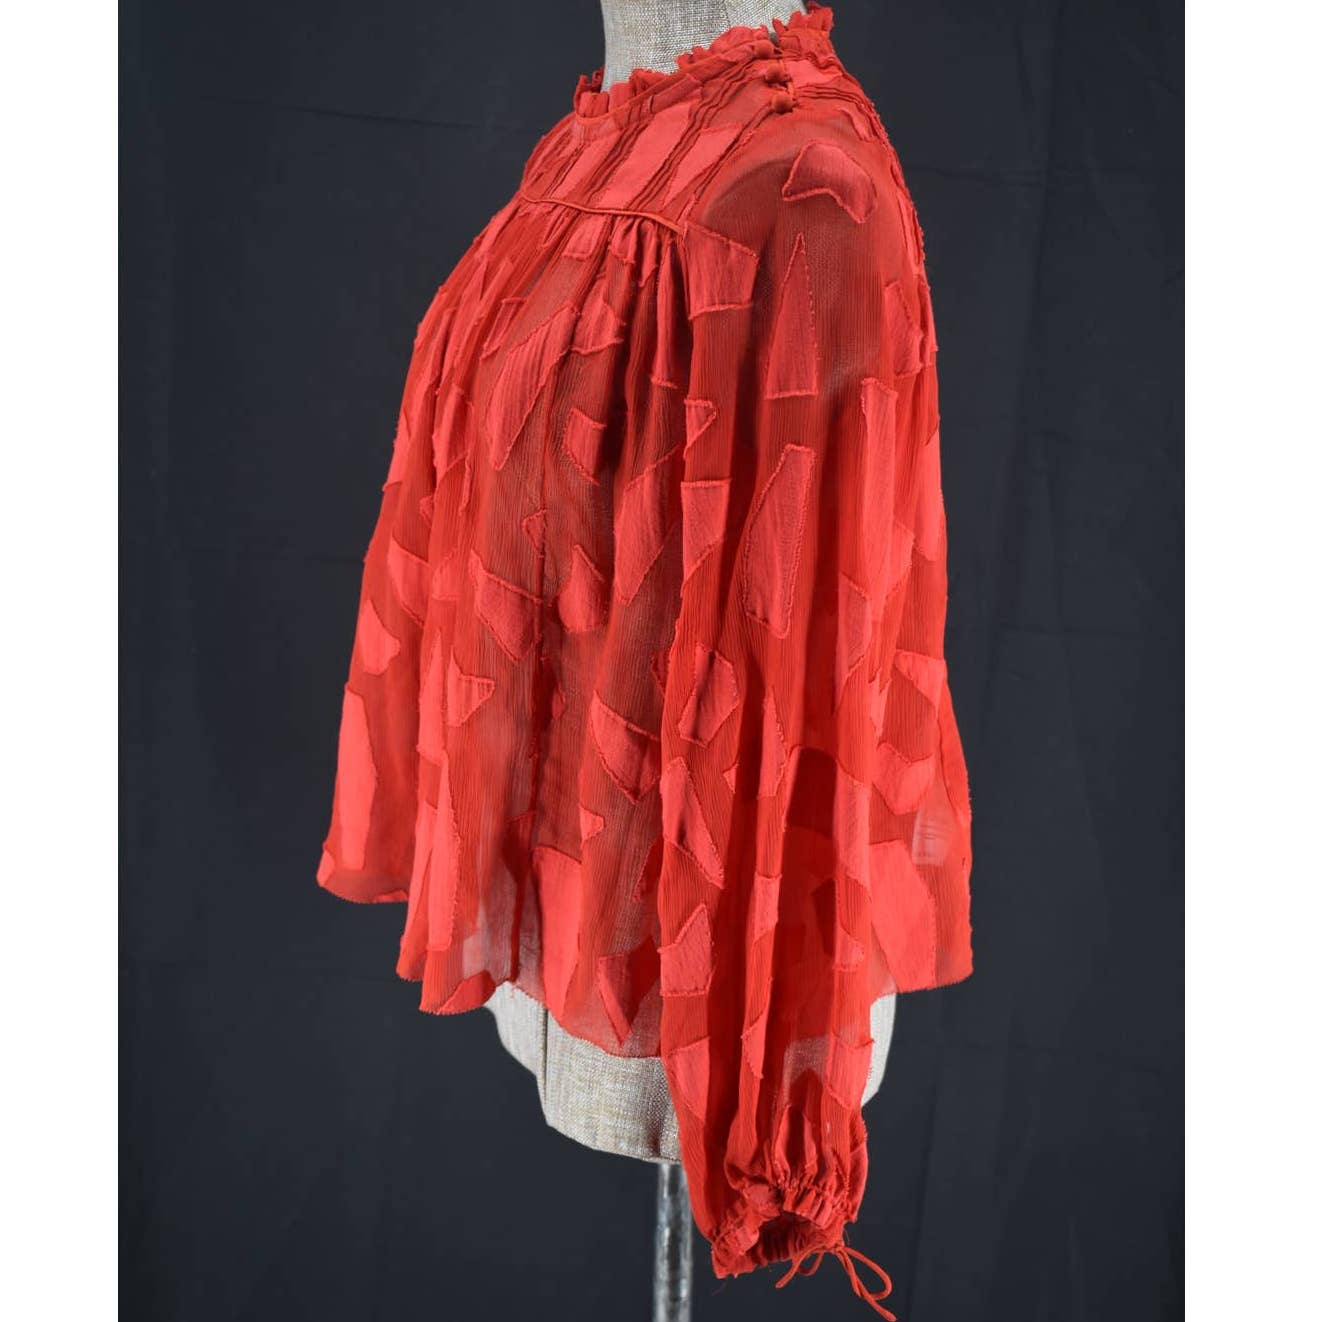 Le Fou Wilfred Sheer Ruffle Neck Geometric Red Long Sleeve Blouse- XXS